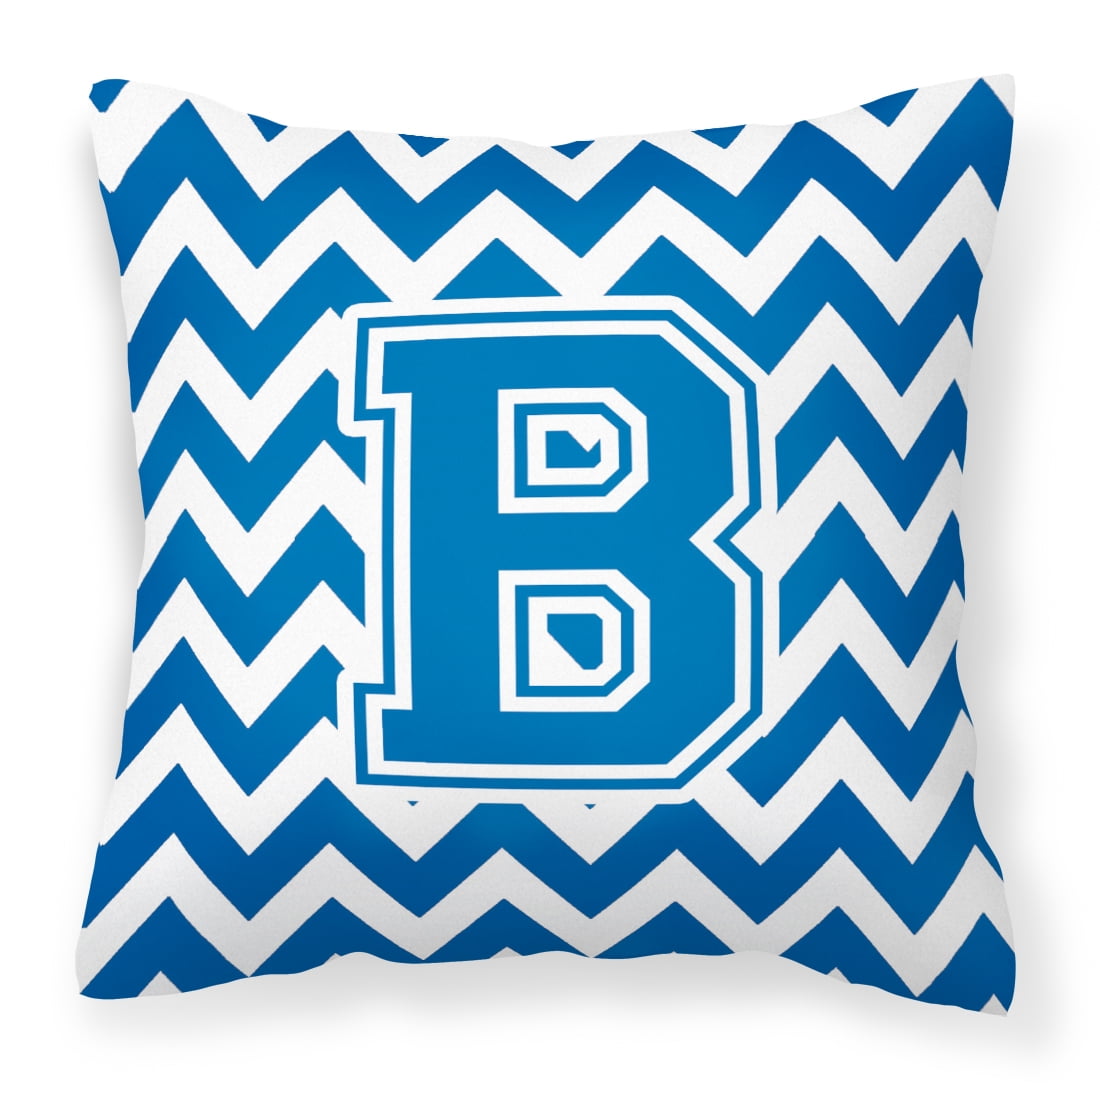 Letter B Chevron Blue and White Fabric Decorative Pillow - Walmart.com